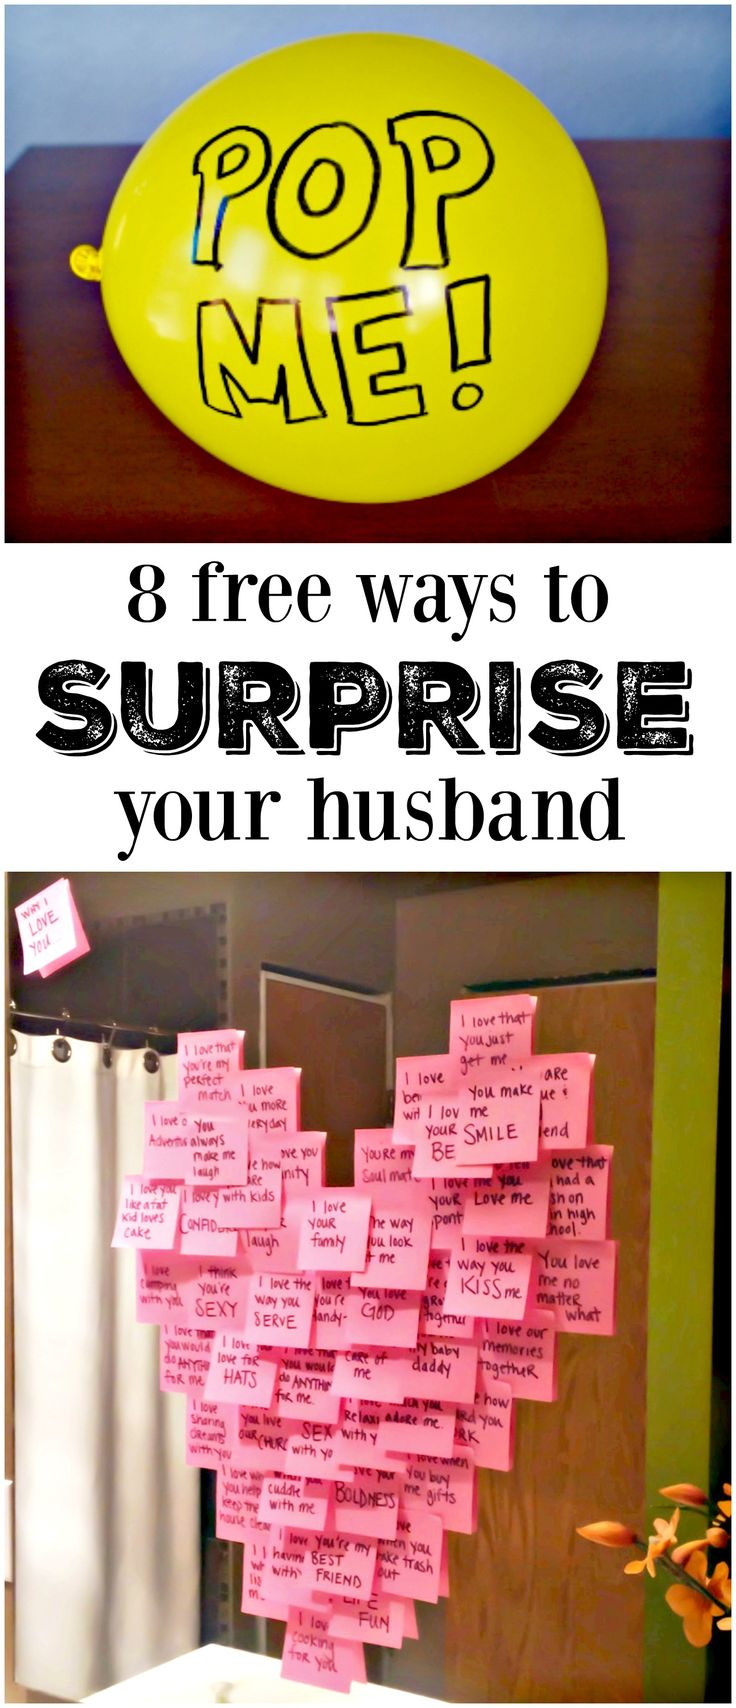 Best ideas about Husband Birthday Gift Ideas
. Save or Pin 25 best ideas about Husband birthday ts on Pinterest Now.